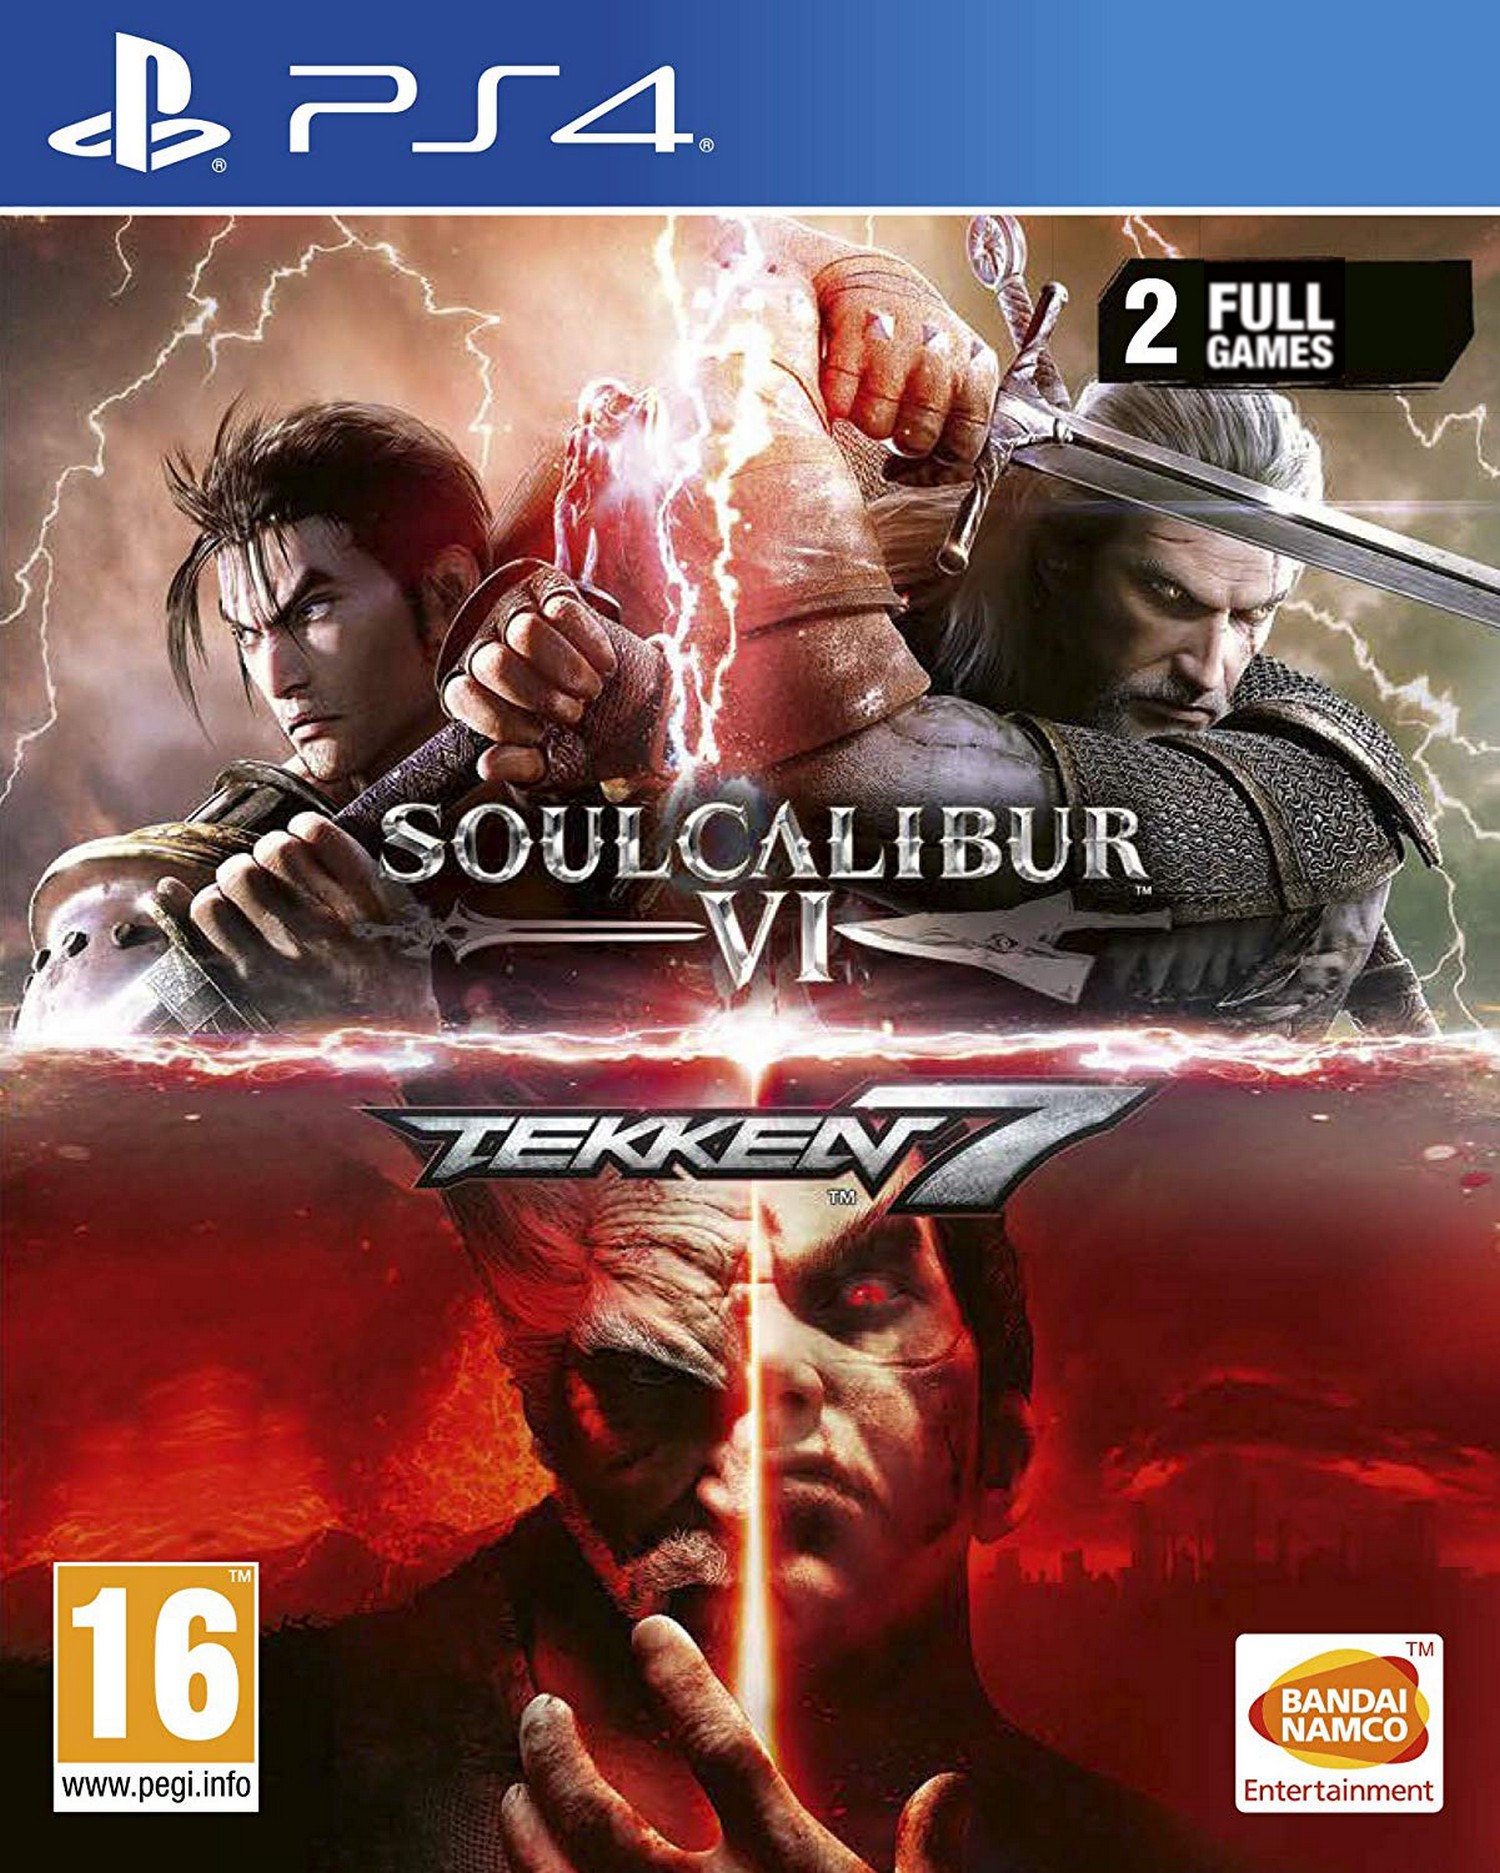 PS4 Soulcalibur VI + Tekken 7 Bundle